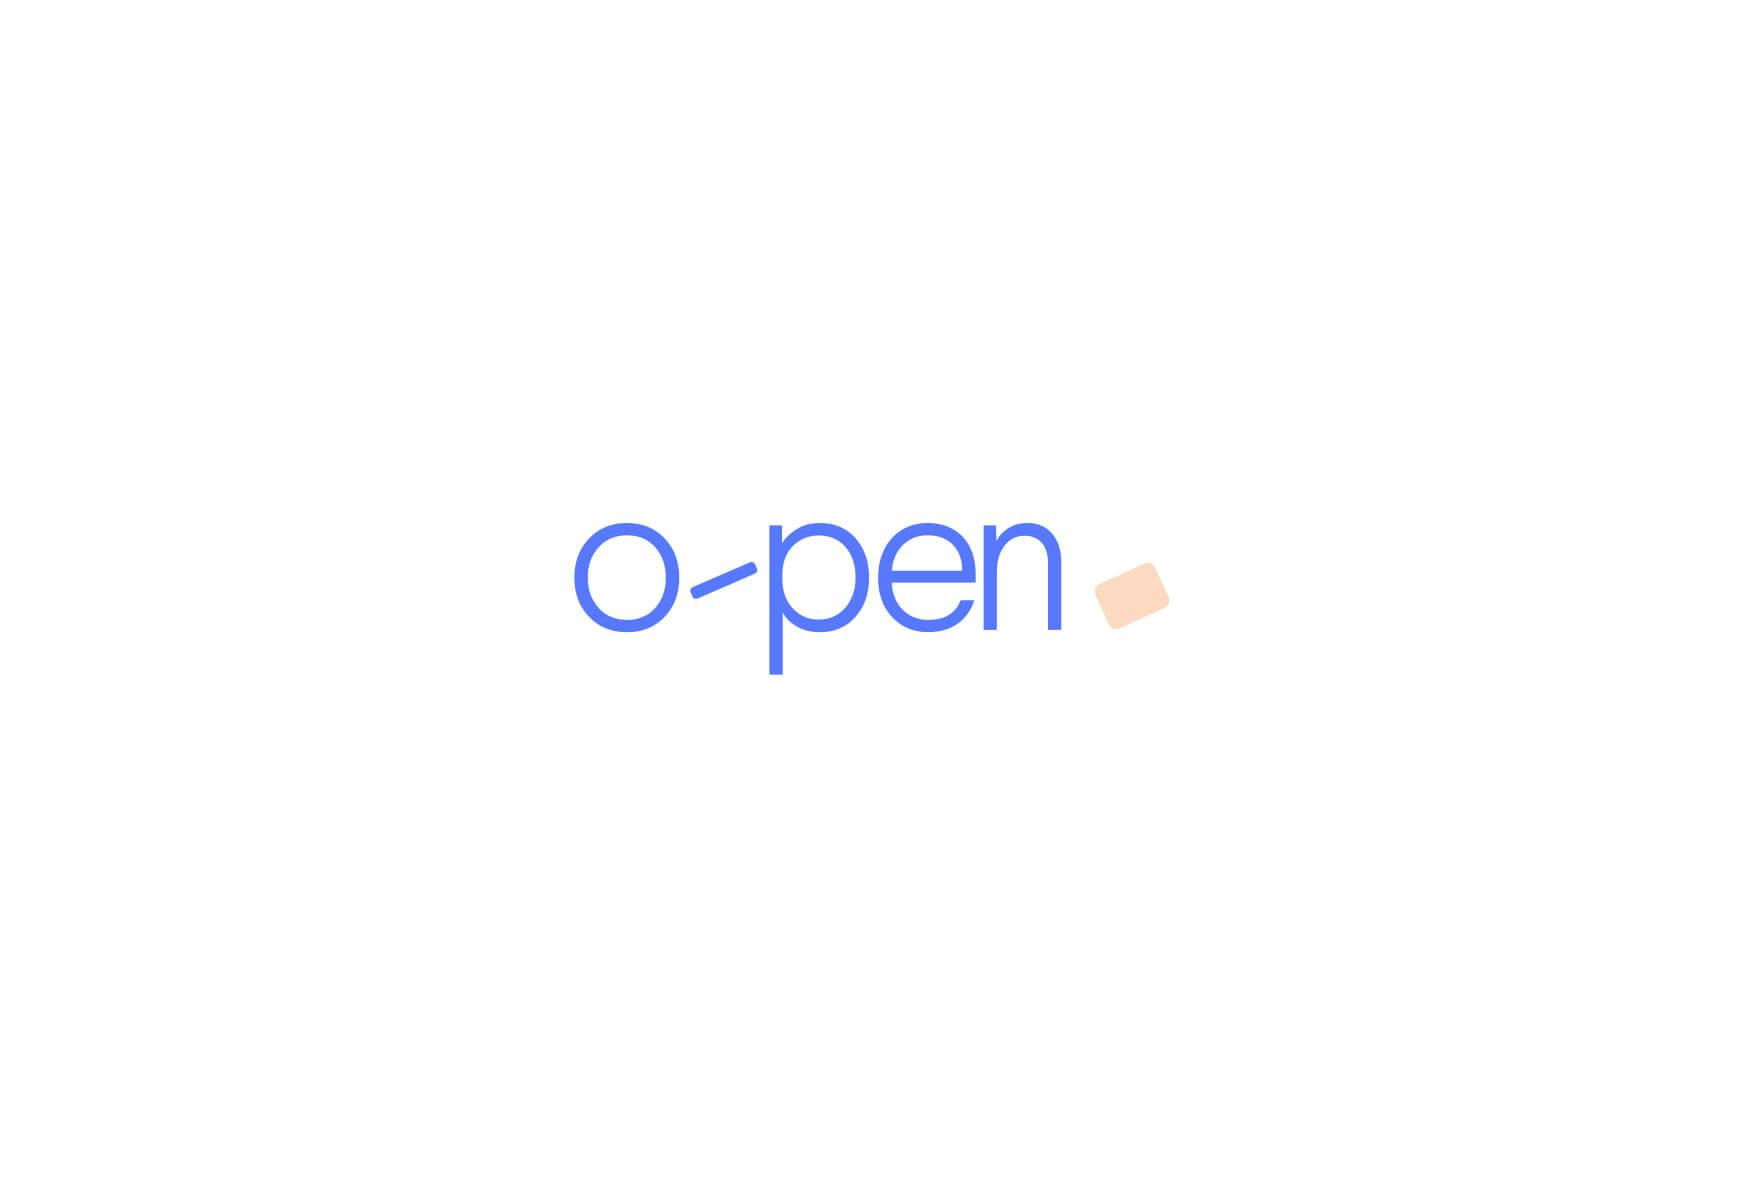 Logotype O-Pen on white background